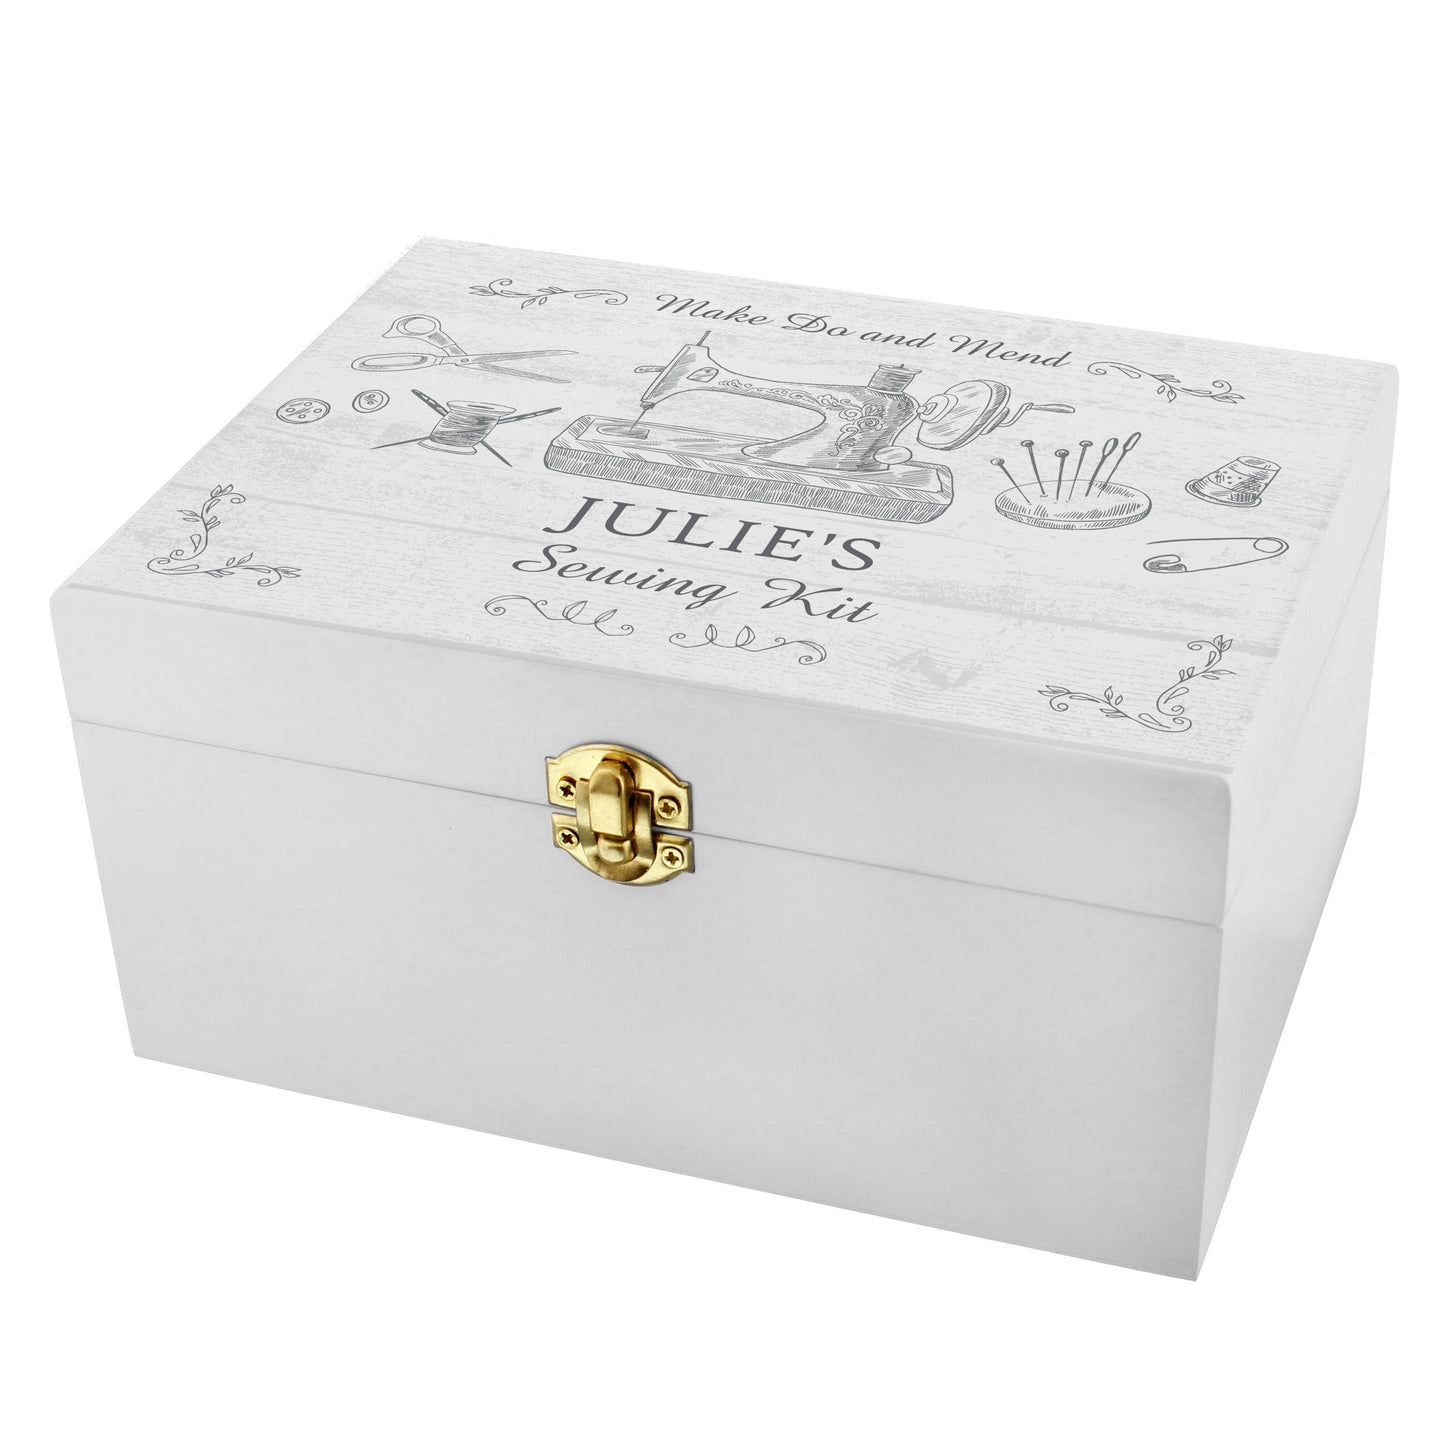 Personalised Sewing Kit White Wooden Keepsake Box - Personalise It!